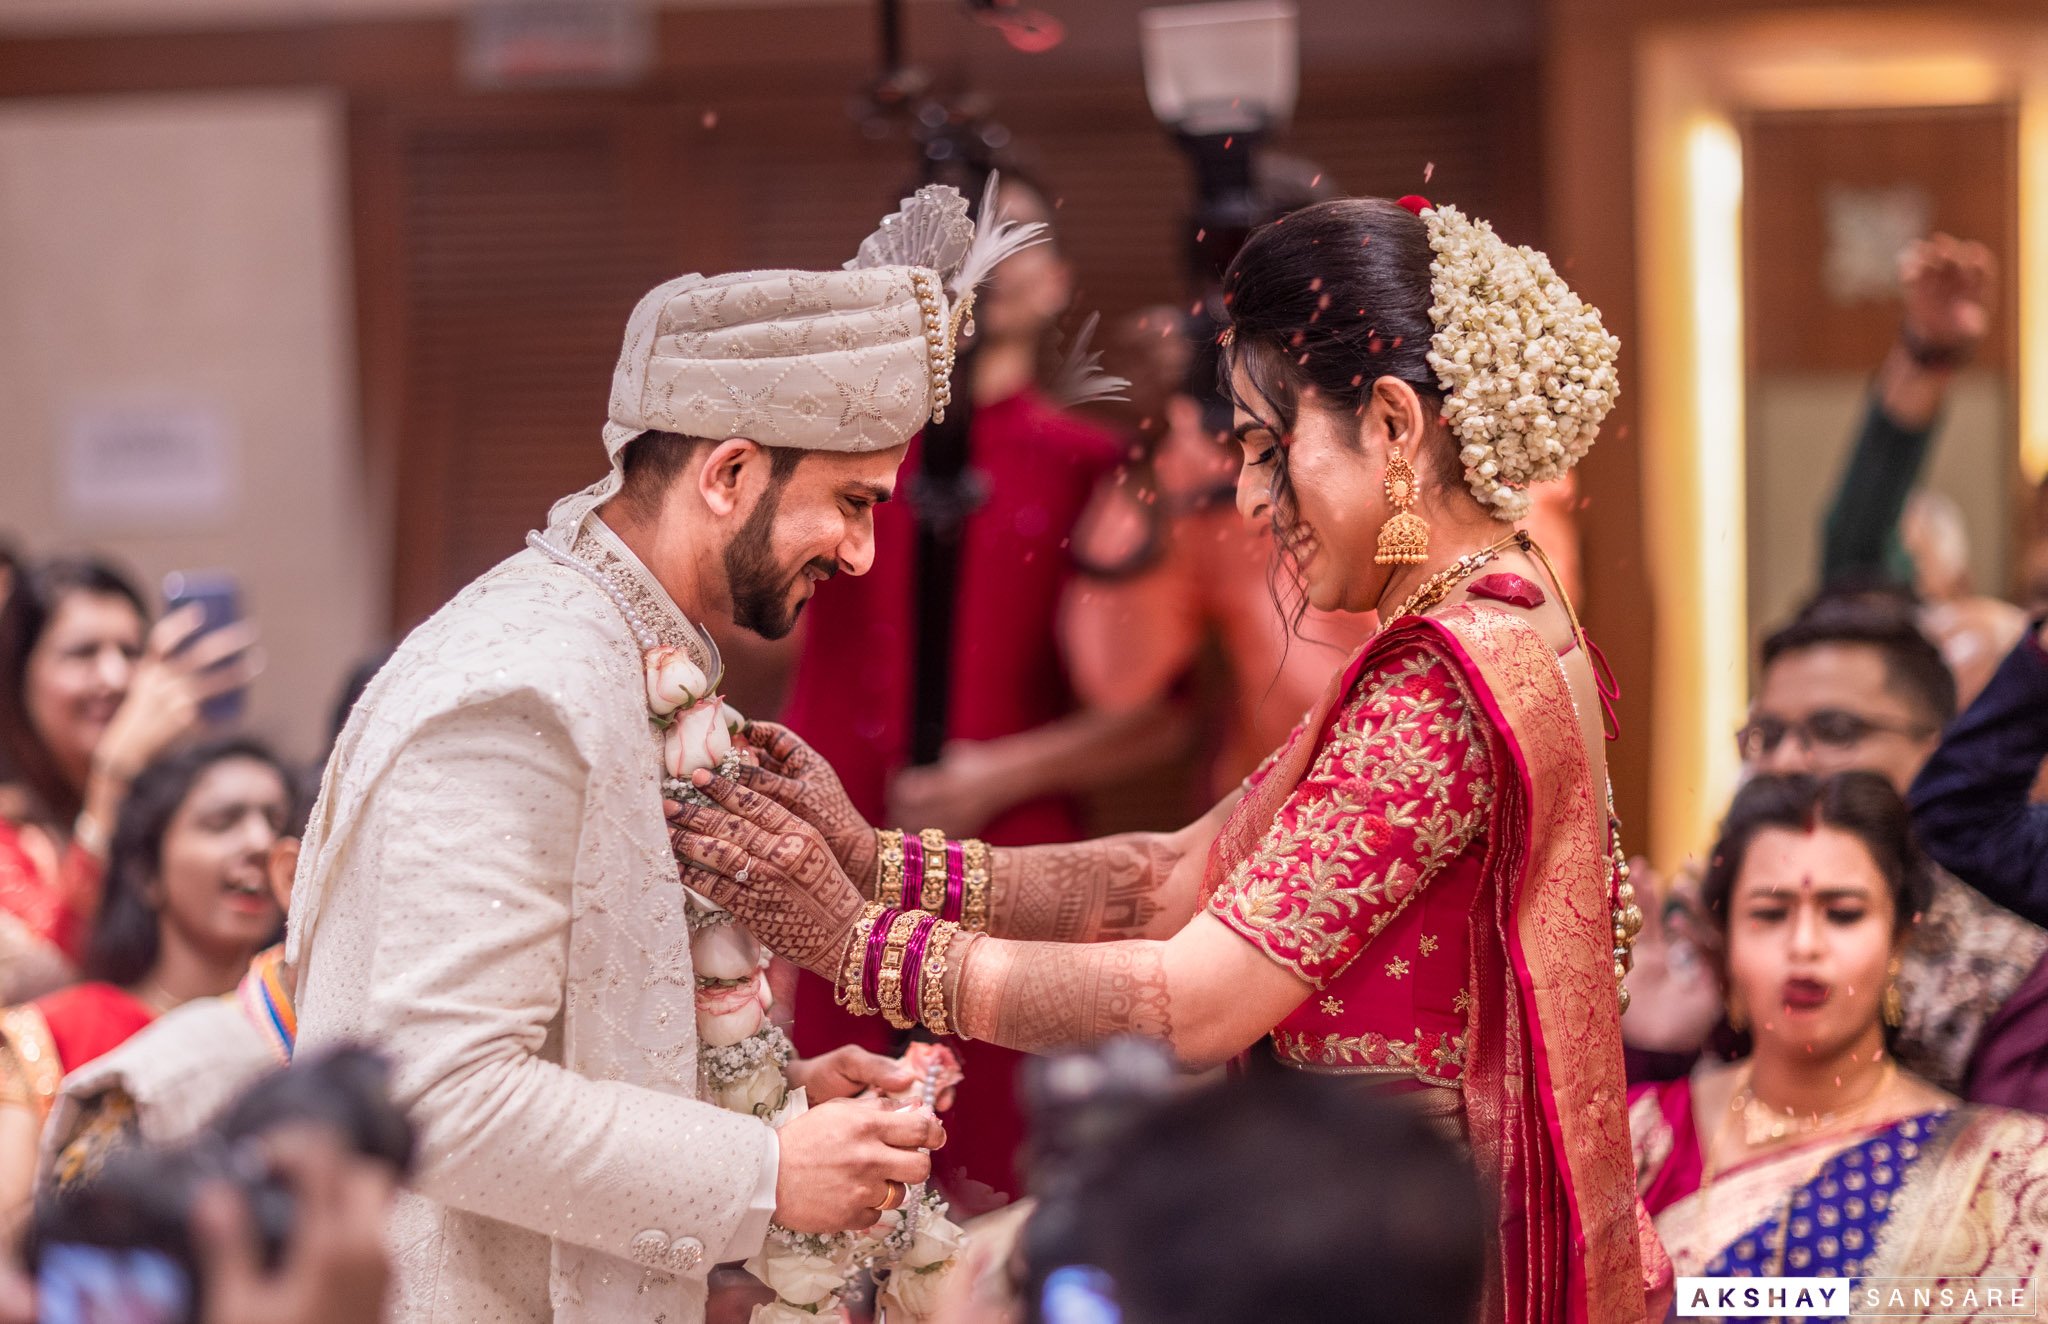 Lipika x Bhavya Compress Akshay Sansare Photography & Films Best wedding photographers in mumbai india-49.jpg